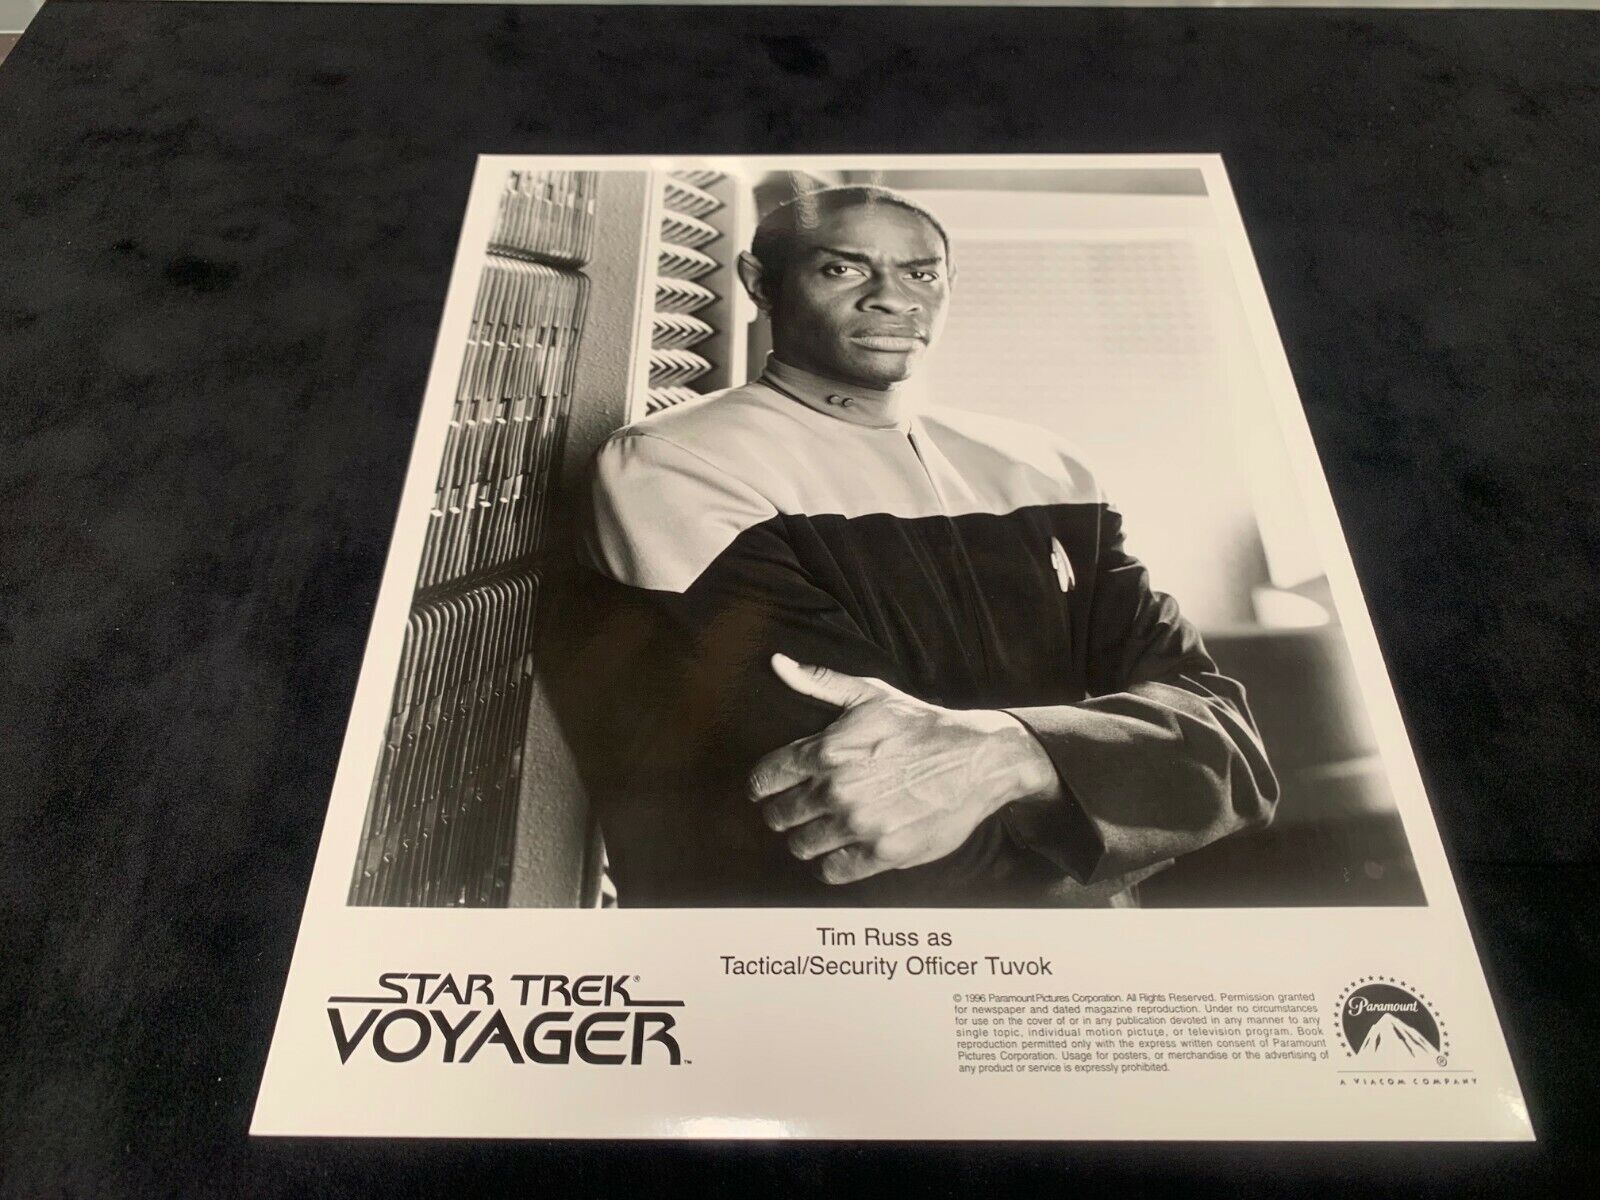 Star Trek Voyager 8x10 B&W Photo of Tim Russ in Excellent Condition